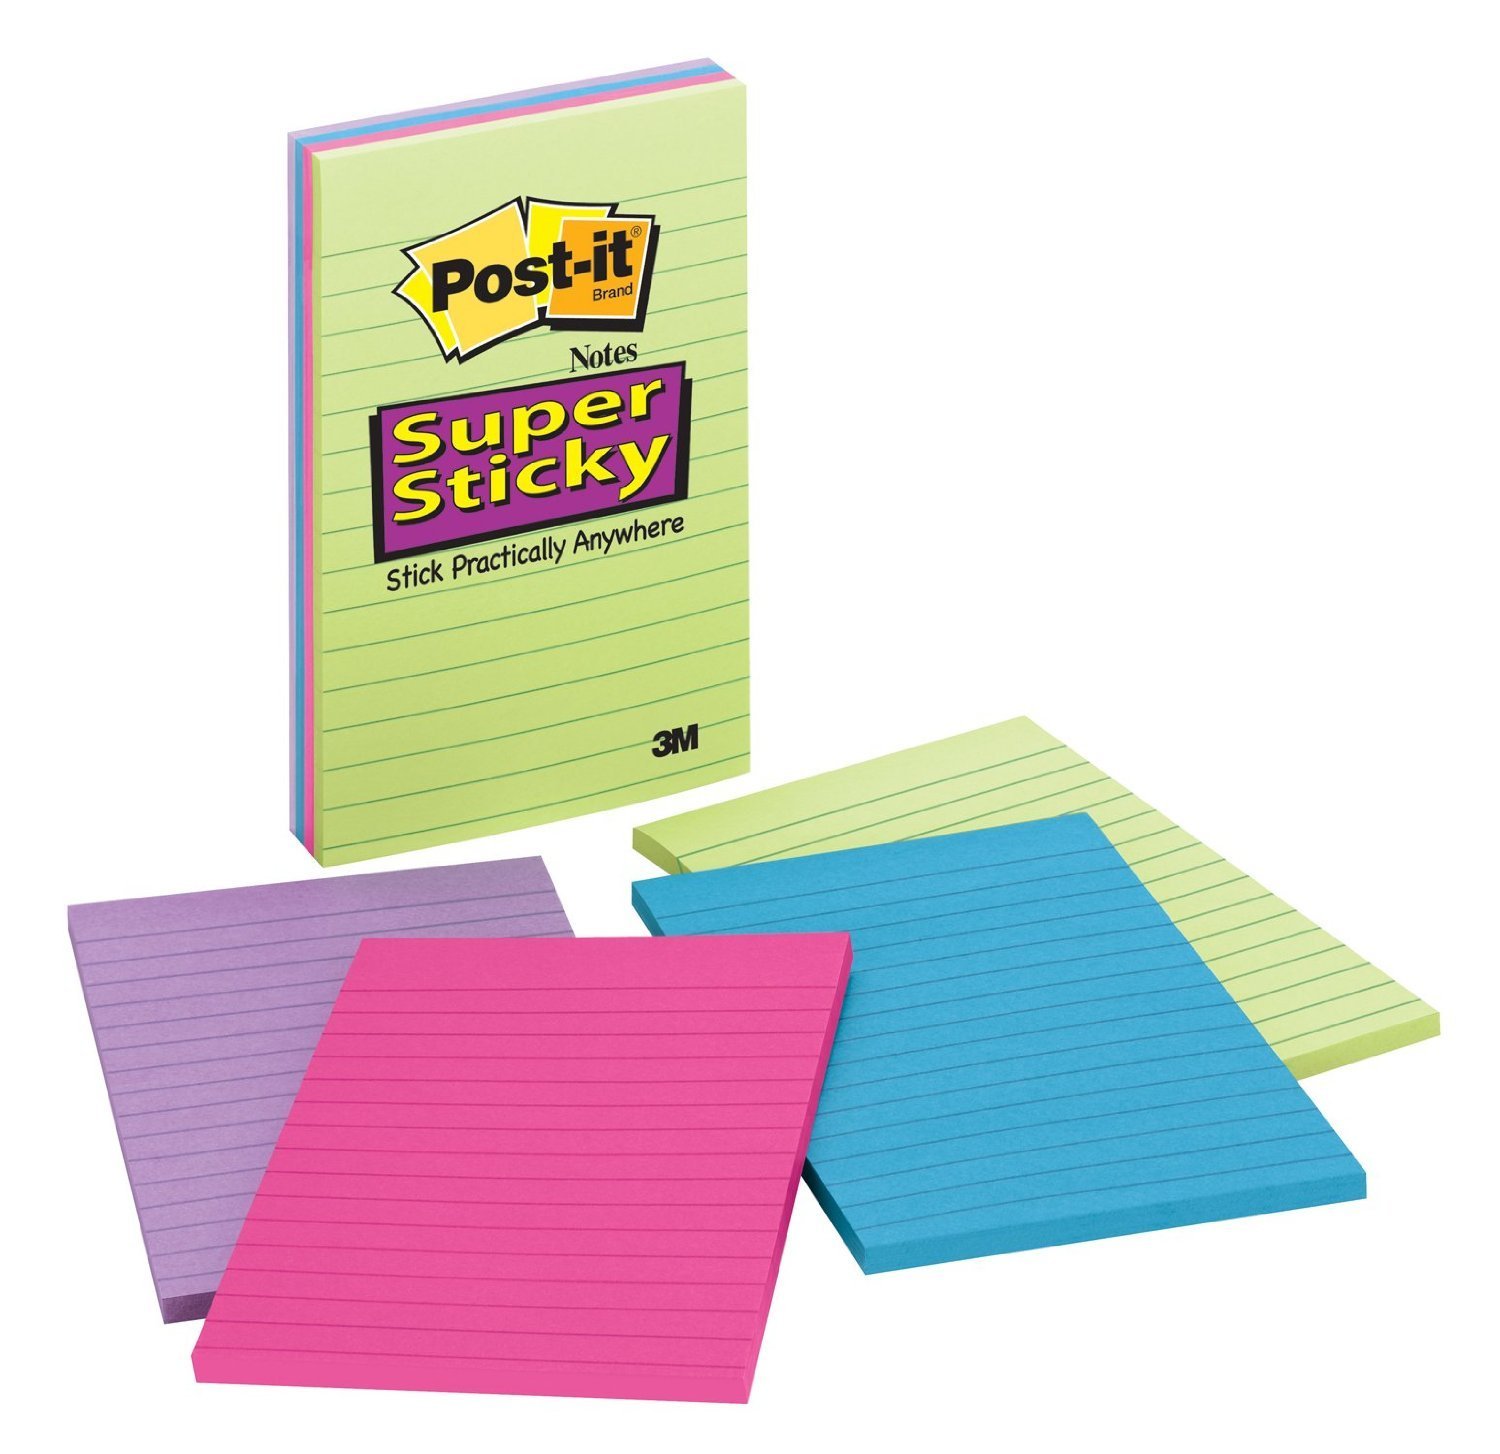 Amazon.com: Notebooks & Writing Pads: Office Products: Self-Stick ...